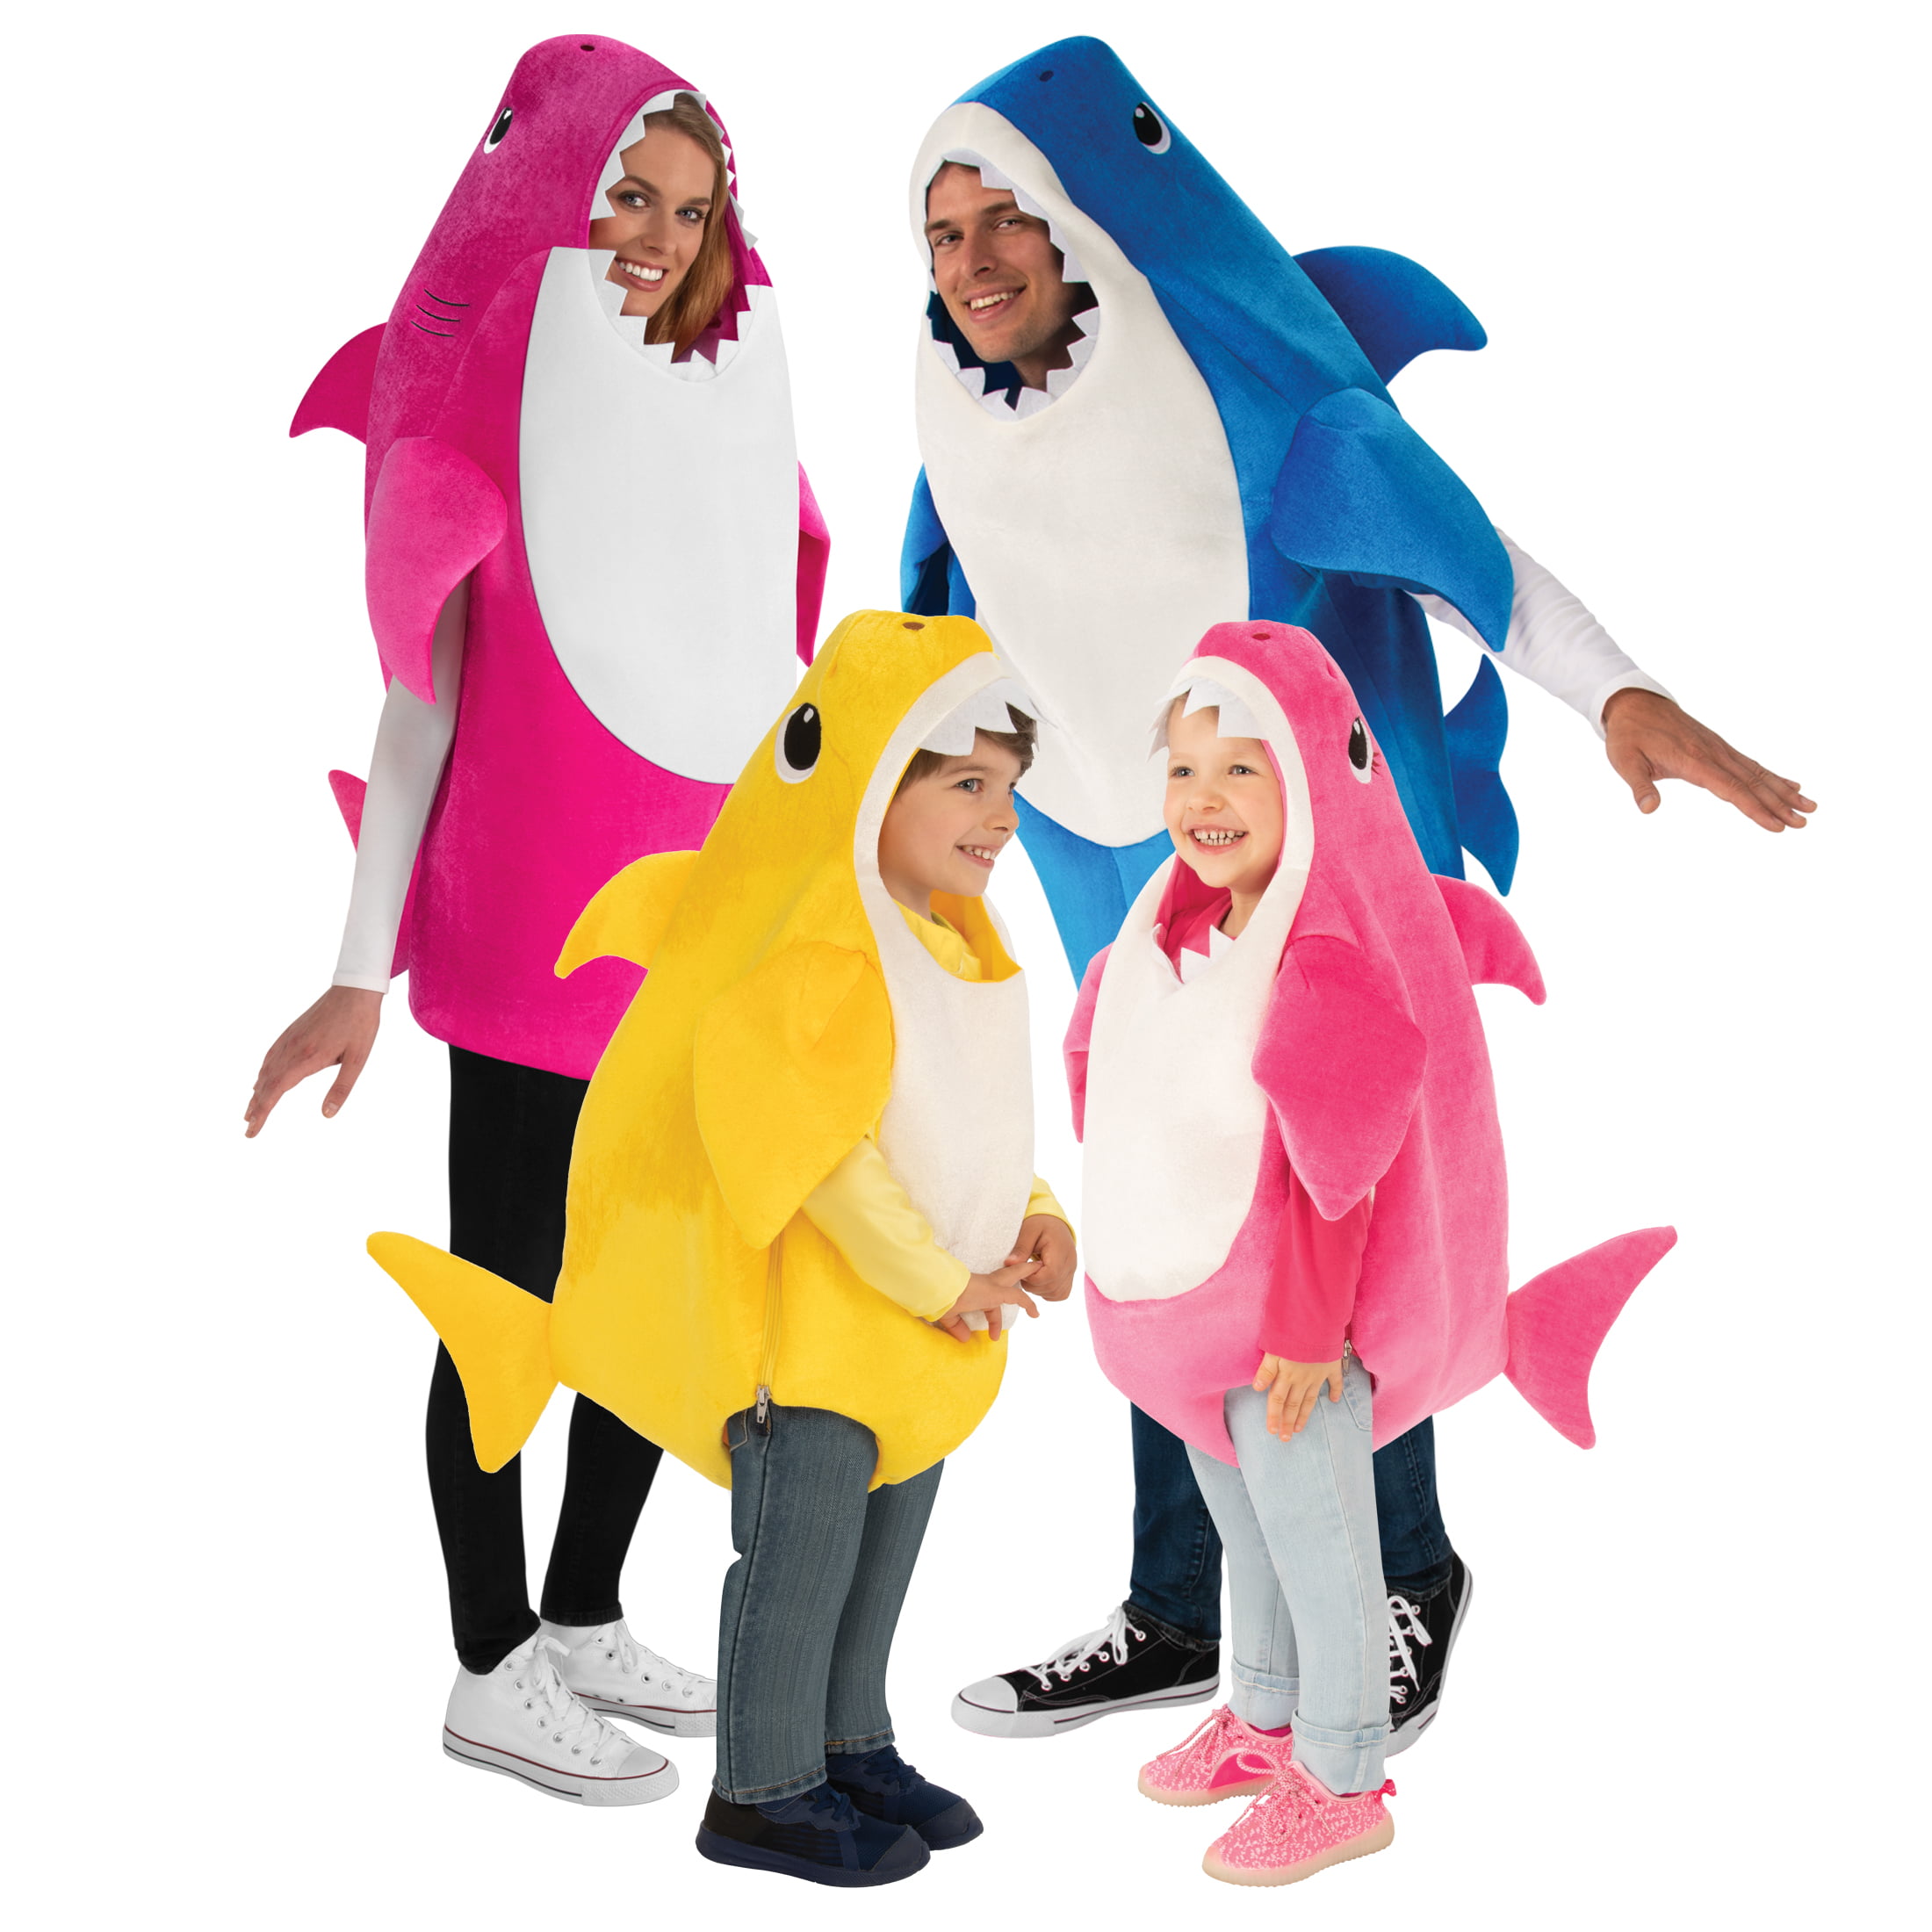 shipfree Shark costume for baby or toddler premierdrugscreening.com